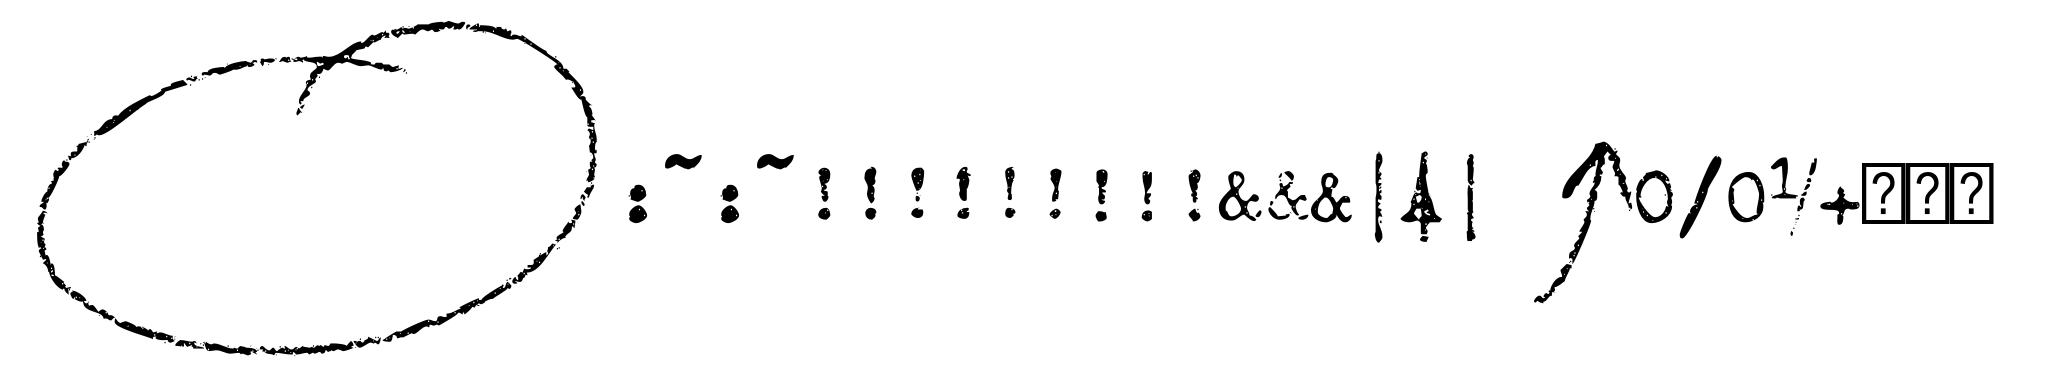 Office Typewriter Misprints SVG image